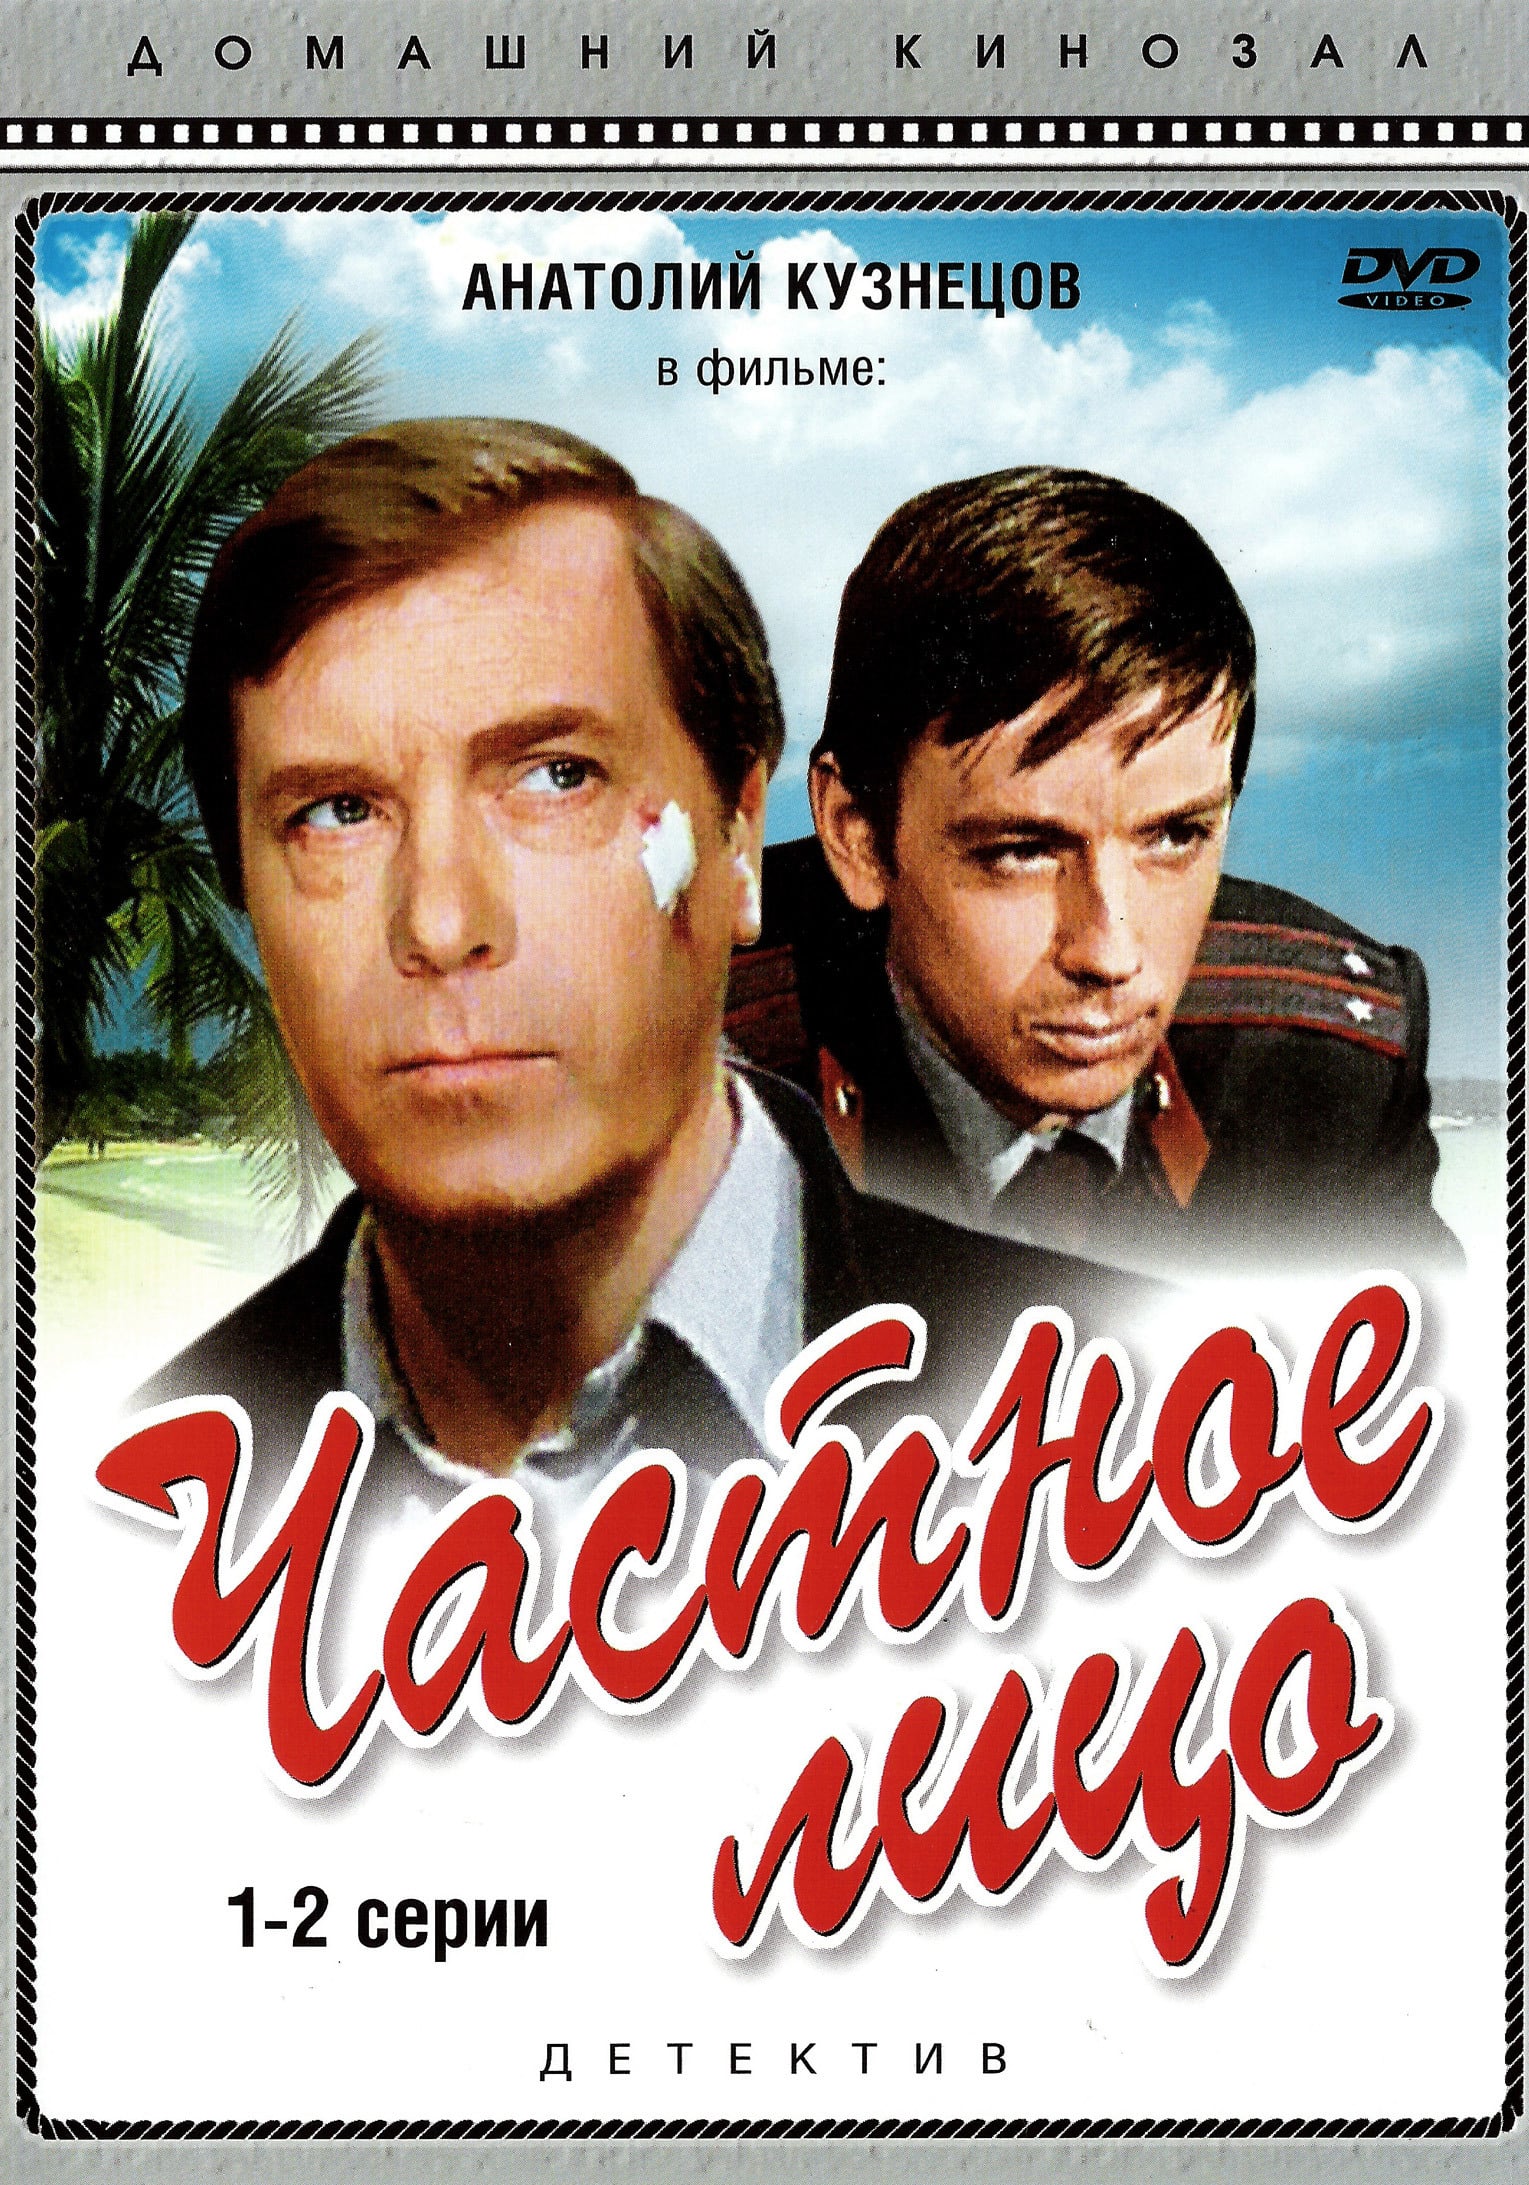   DVD2/1980